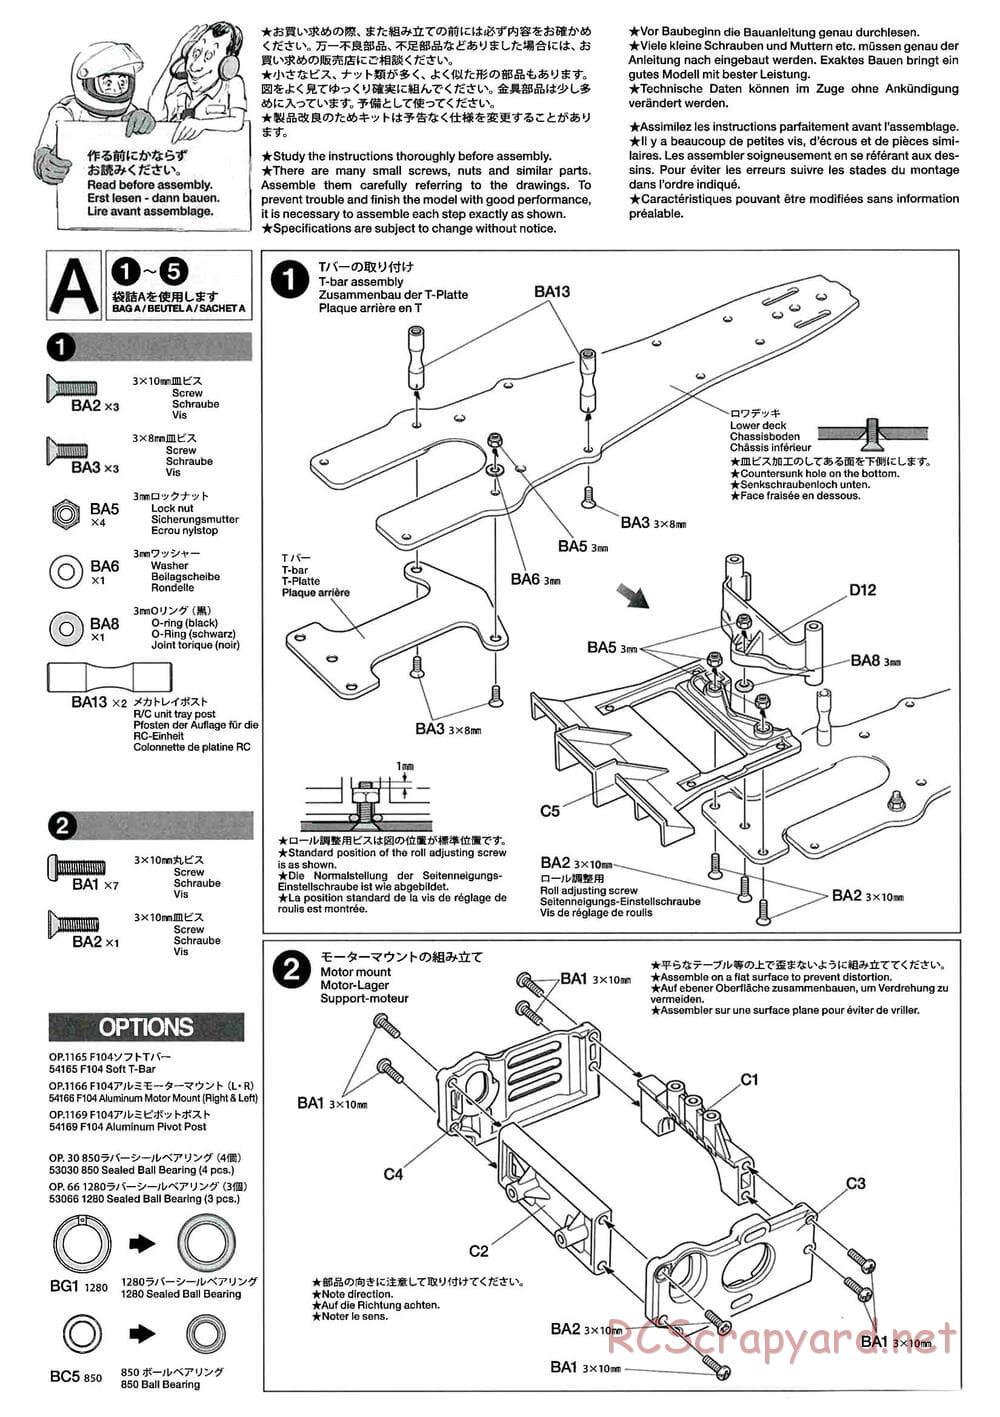 Tamiya - F104W Chassis - Manual - Page 4